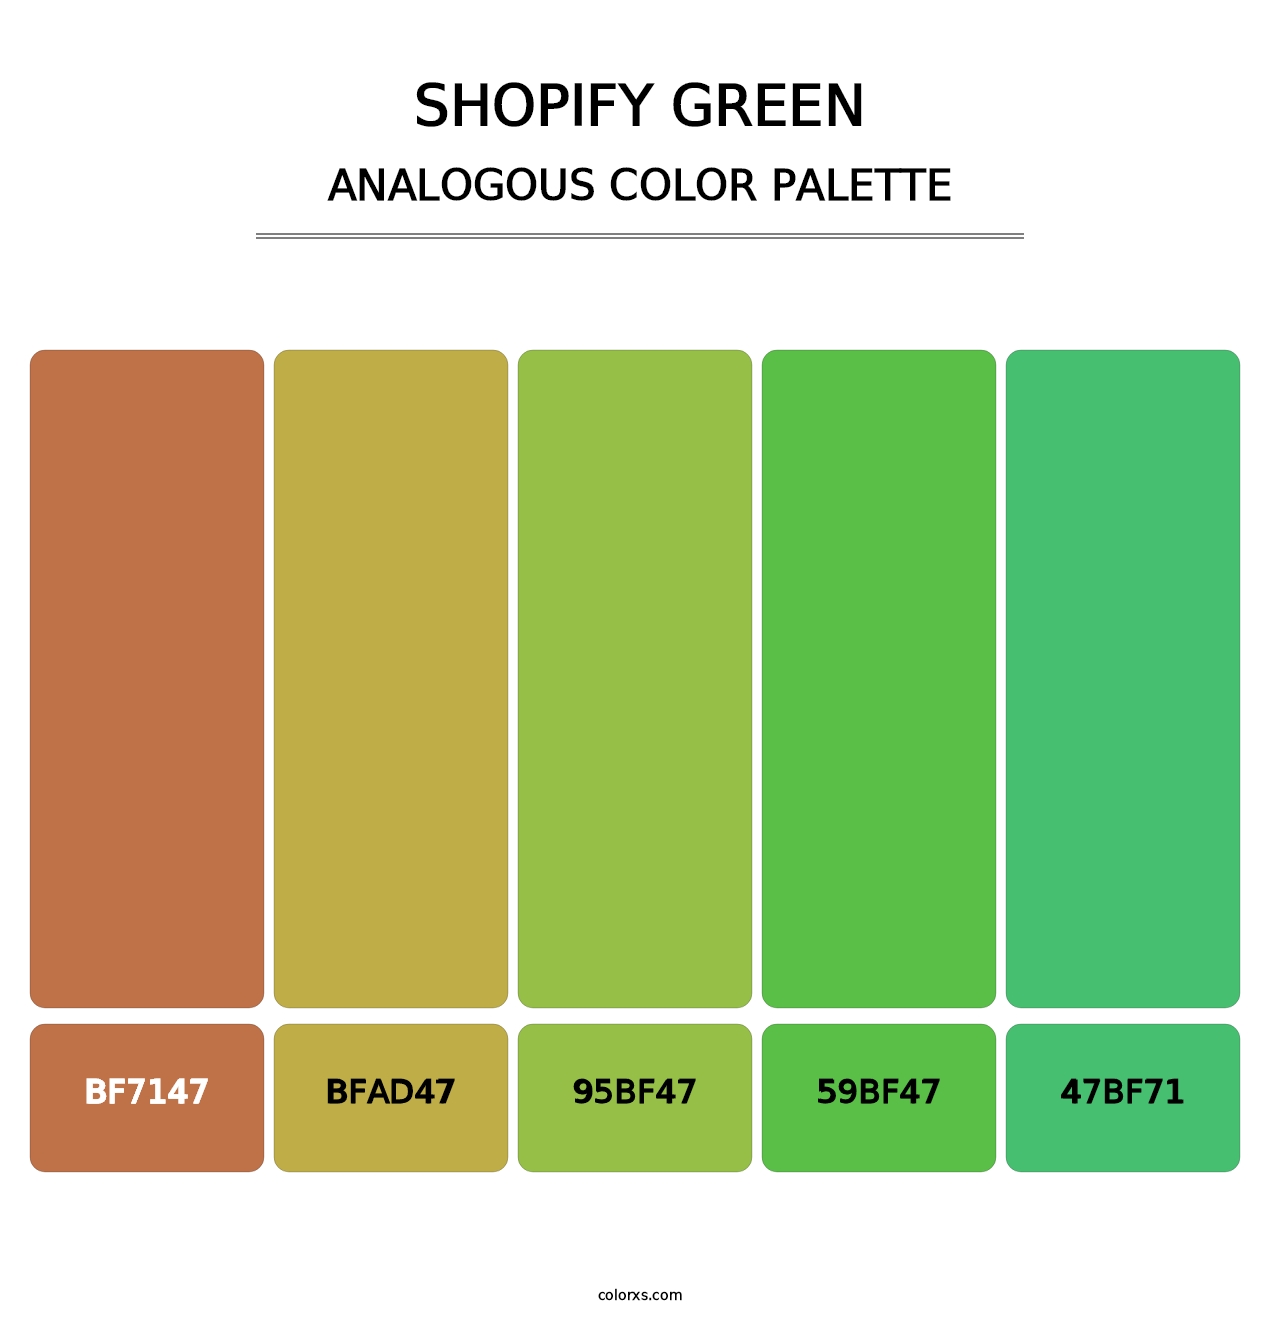 Shopify Green - Analogous Color Palette